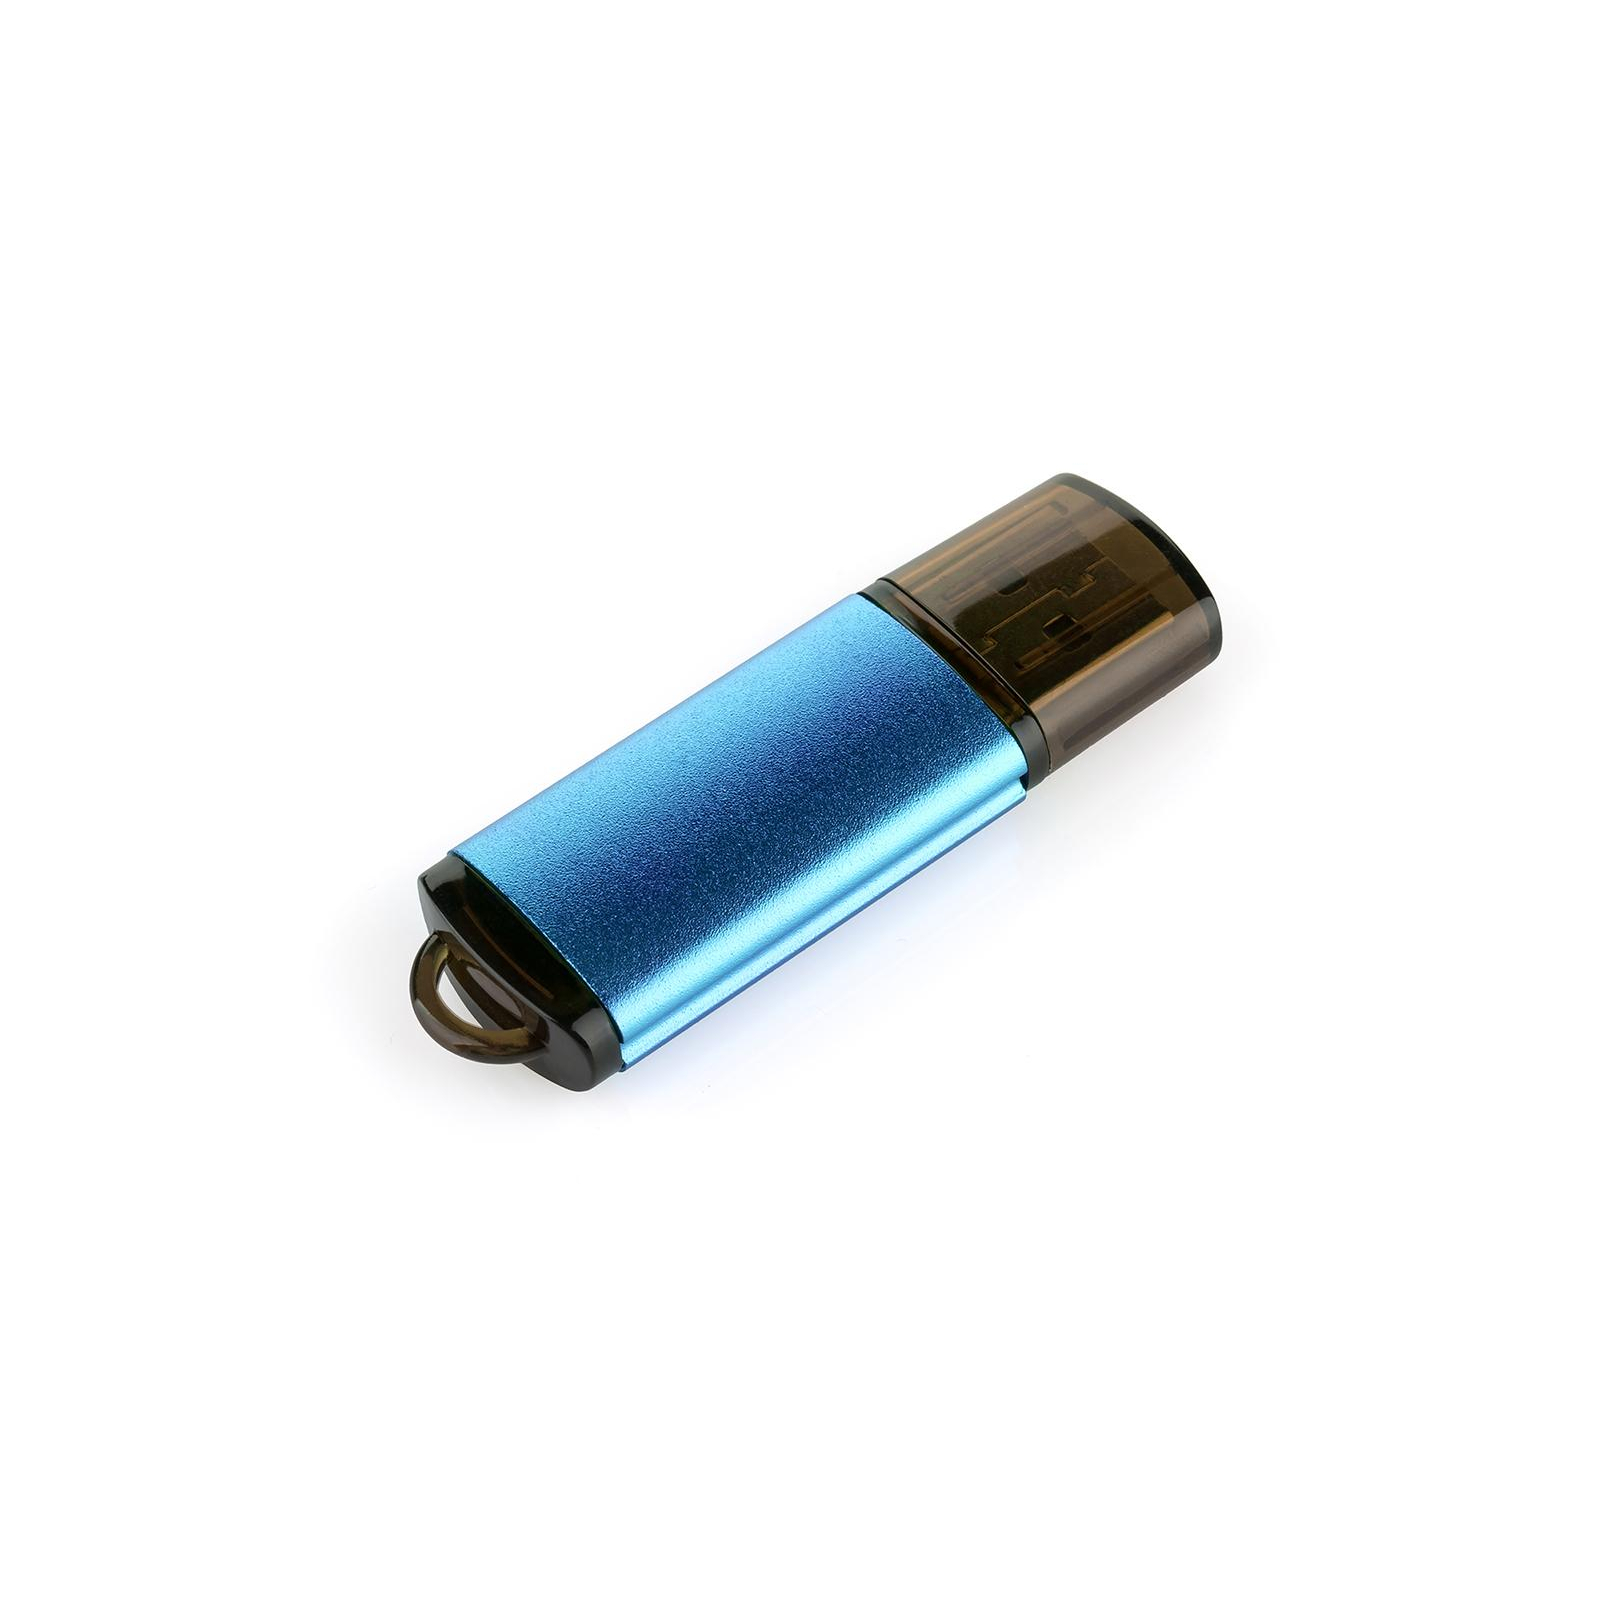 USB флеш накопитель eXceleram 64GB A3 Series Blue USB 2.0 (EXA3U2BL64) изображение 2